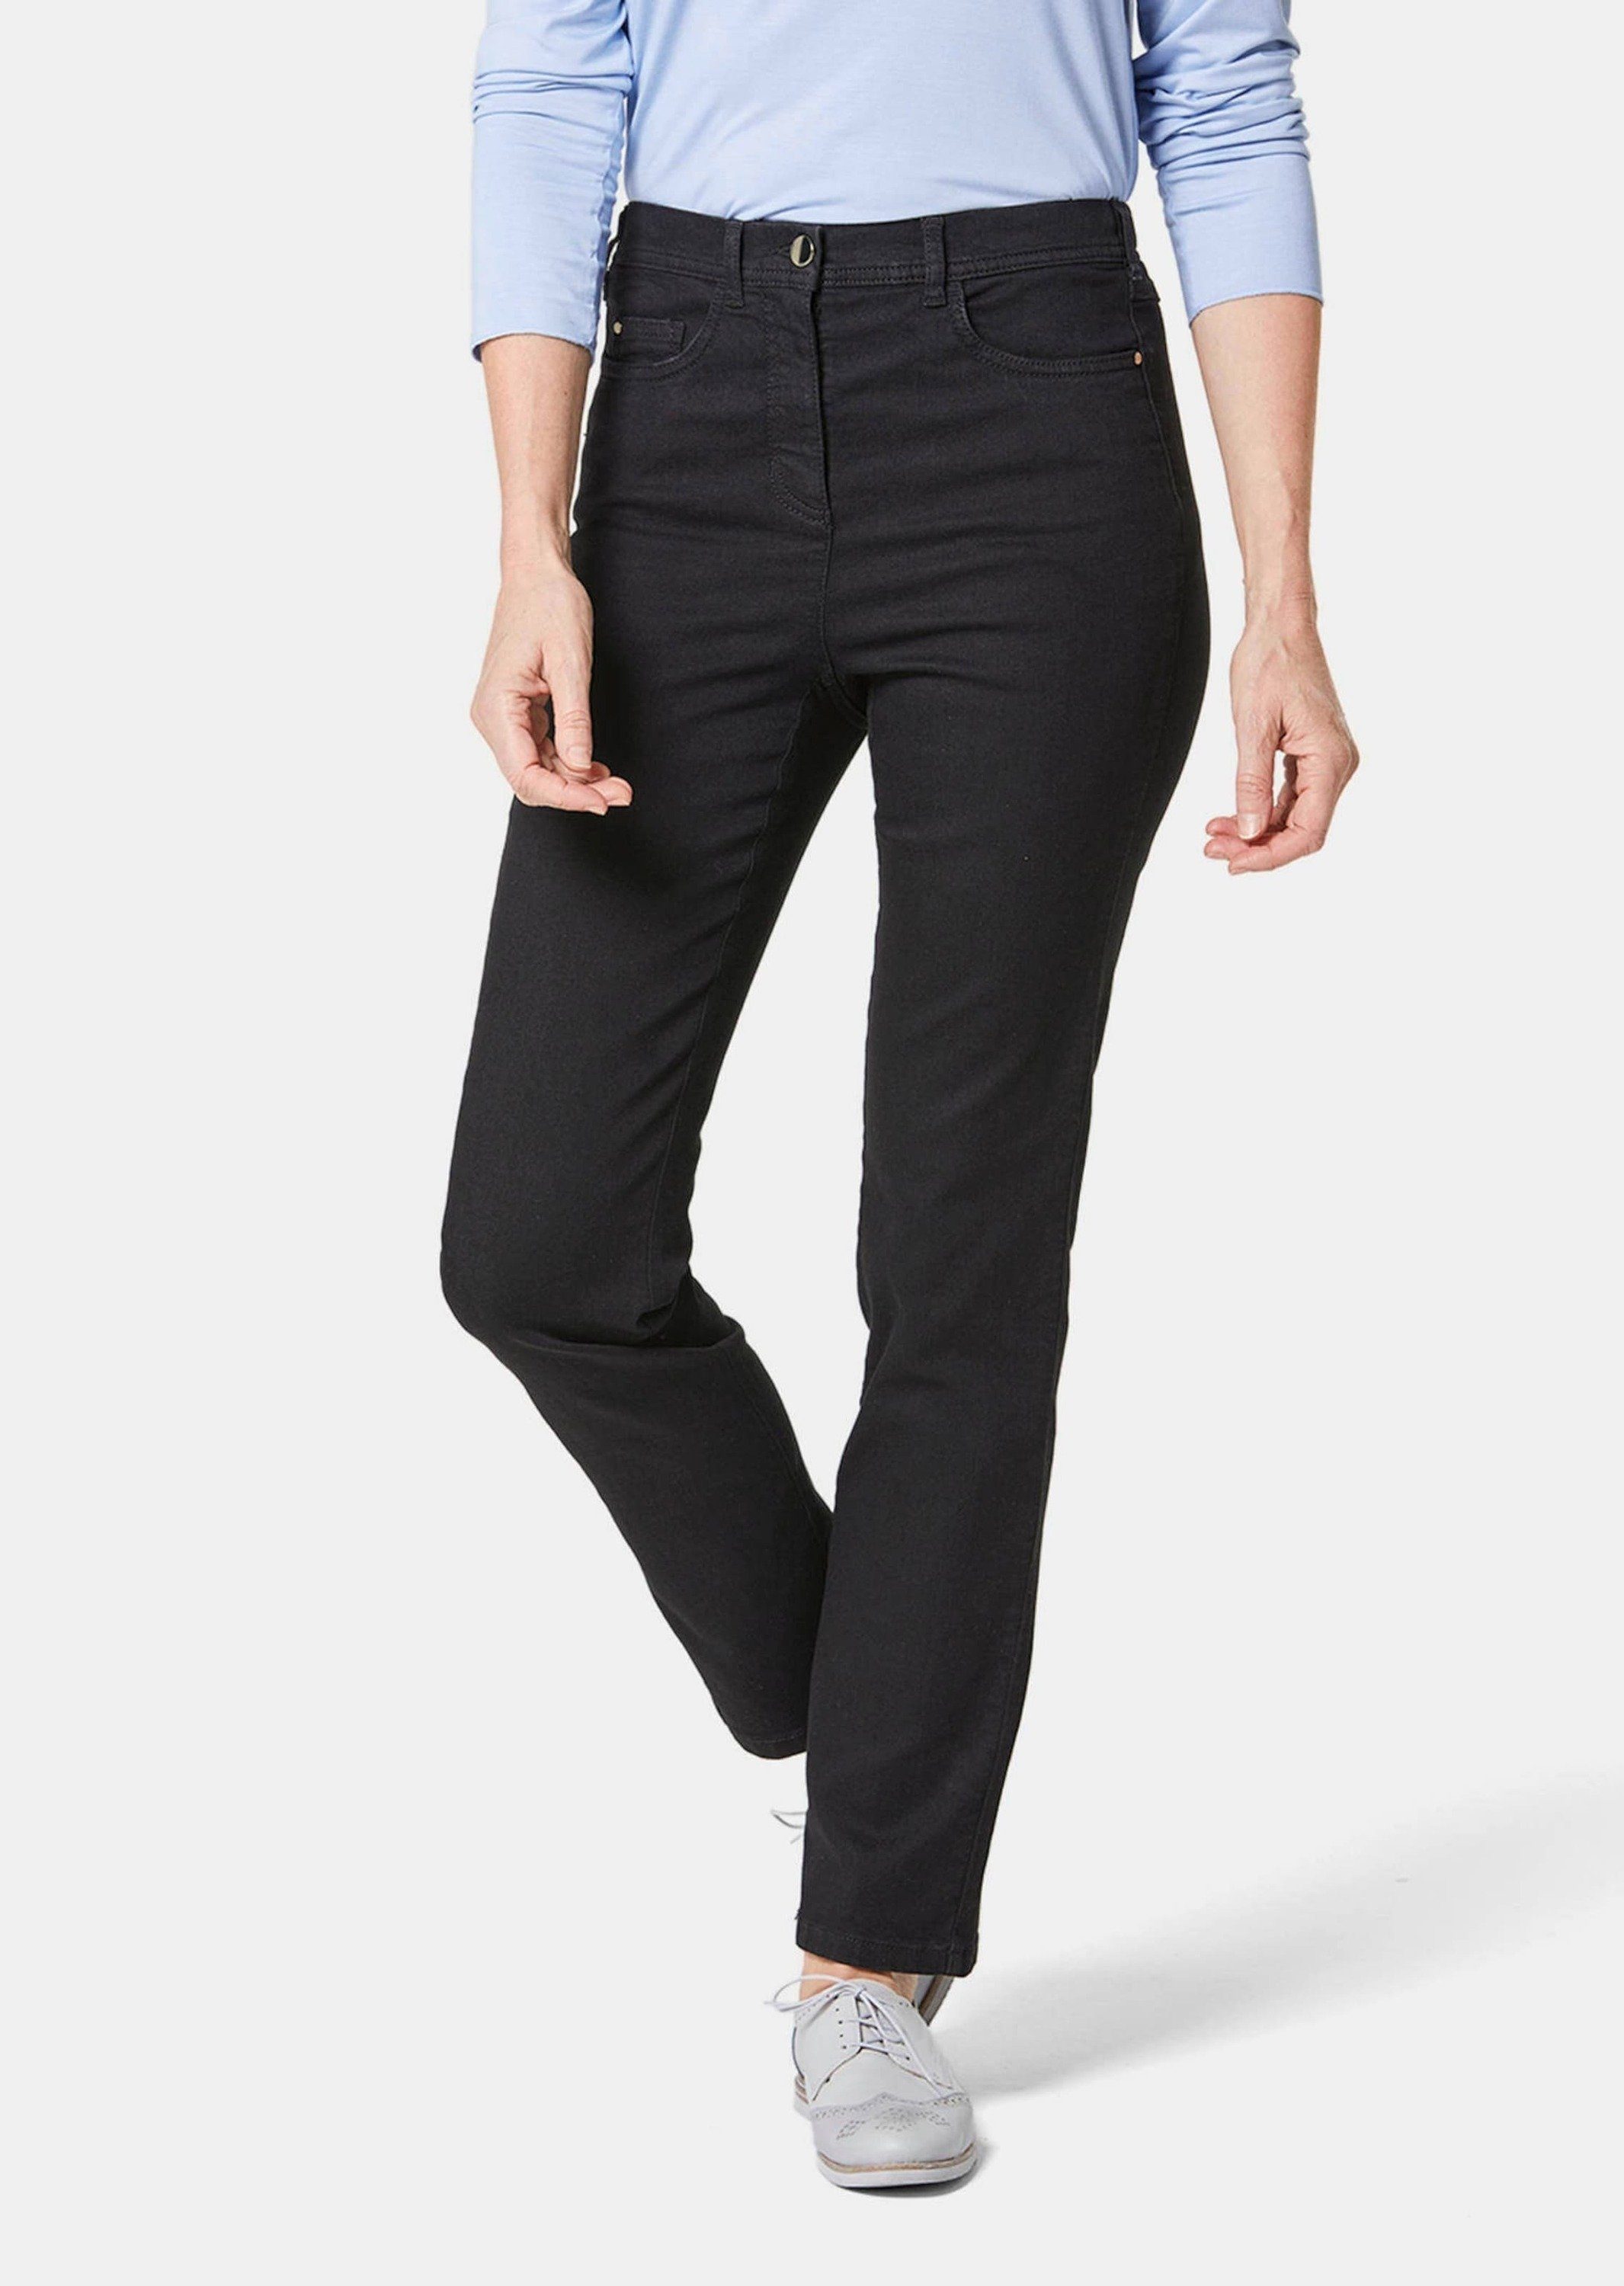 GOLDNER Bequeme Jeans Kurzgröße: Bequeme High-Stretch-Jeanshose schwarz